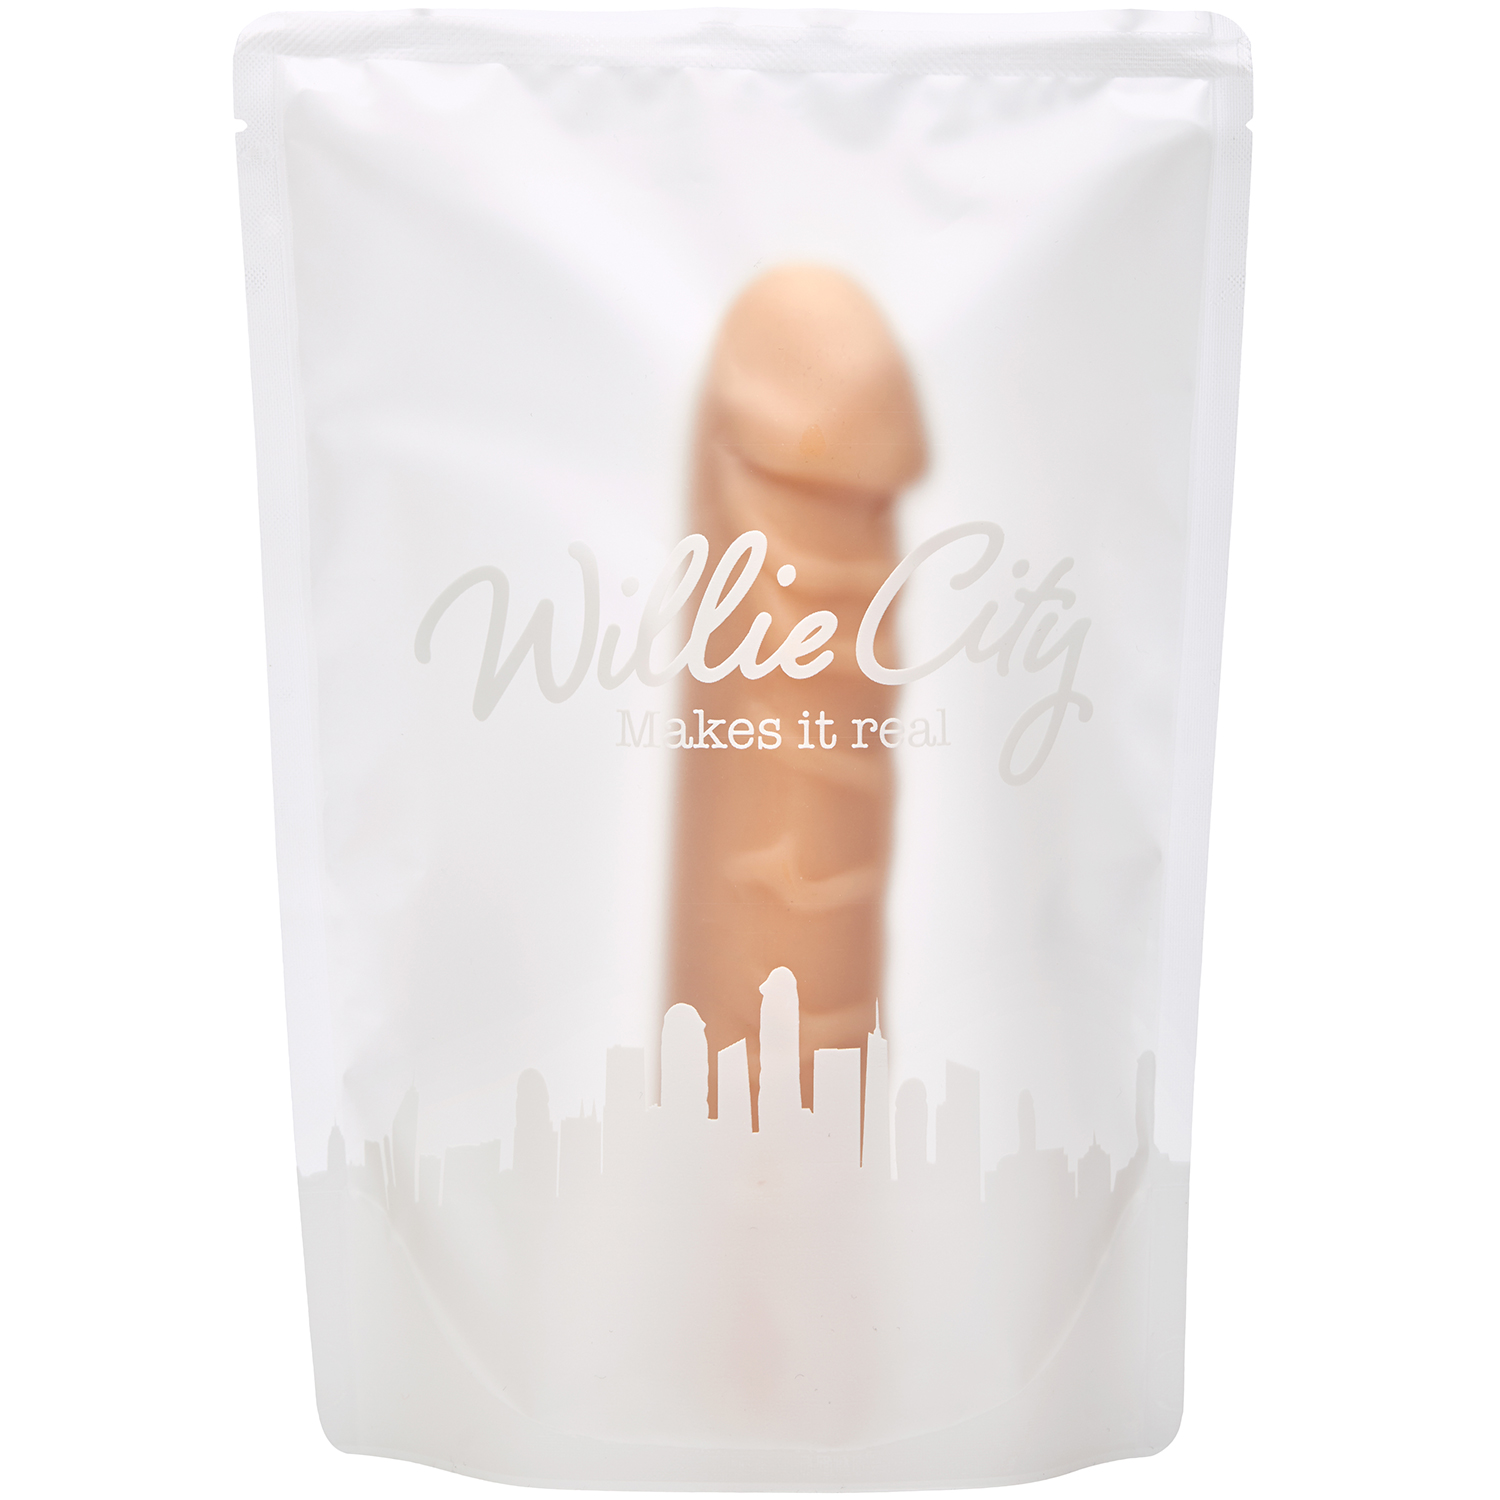 Willie City Realistisk Dildo 19 cm      - Nude thumbnail